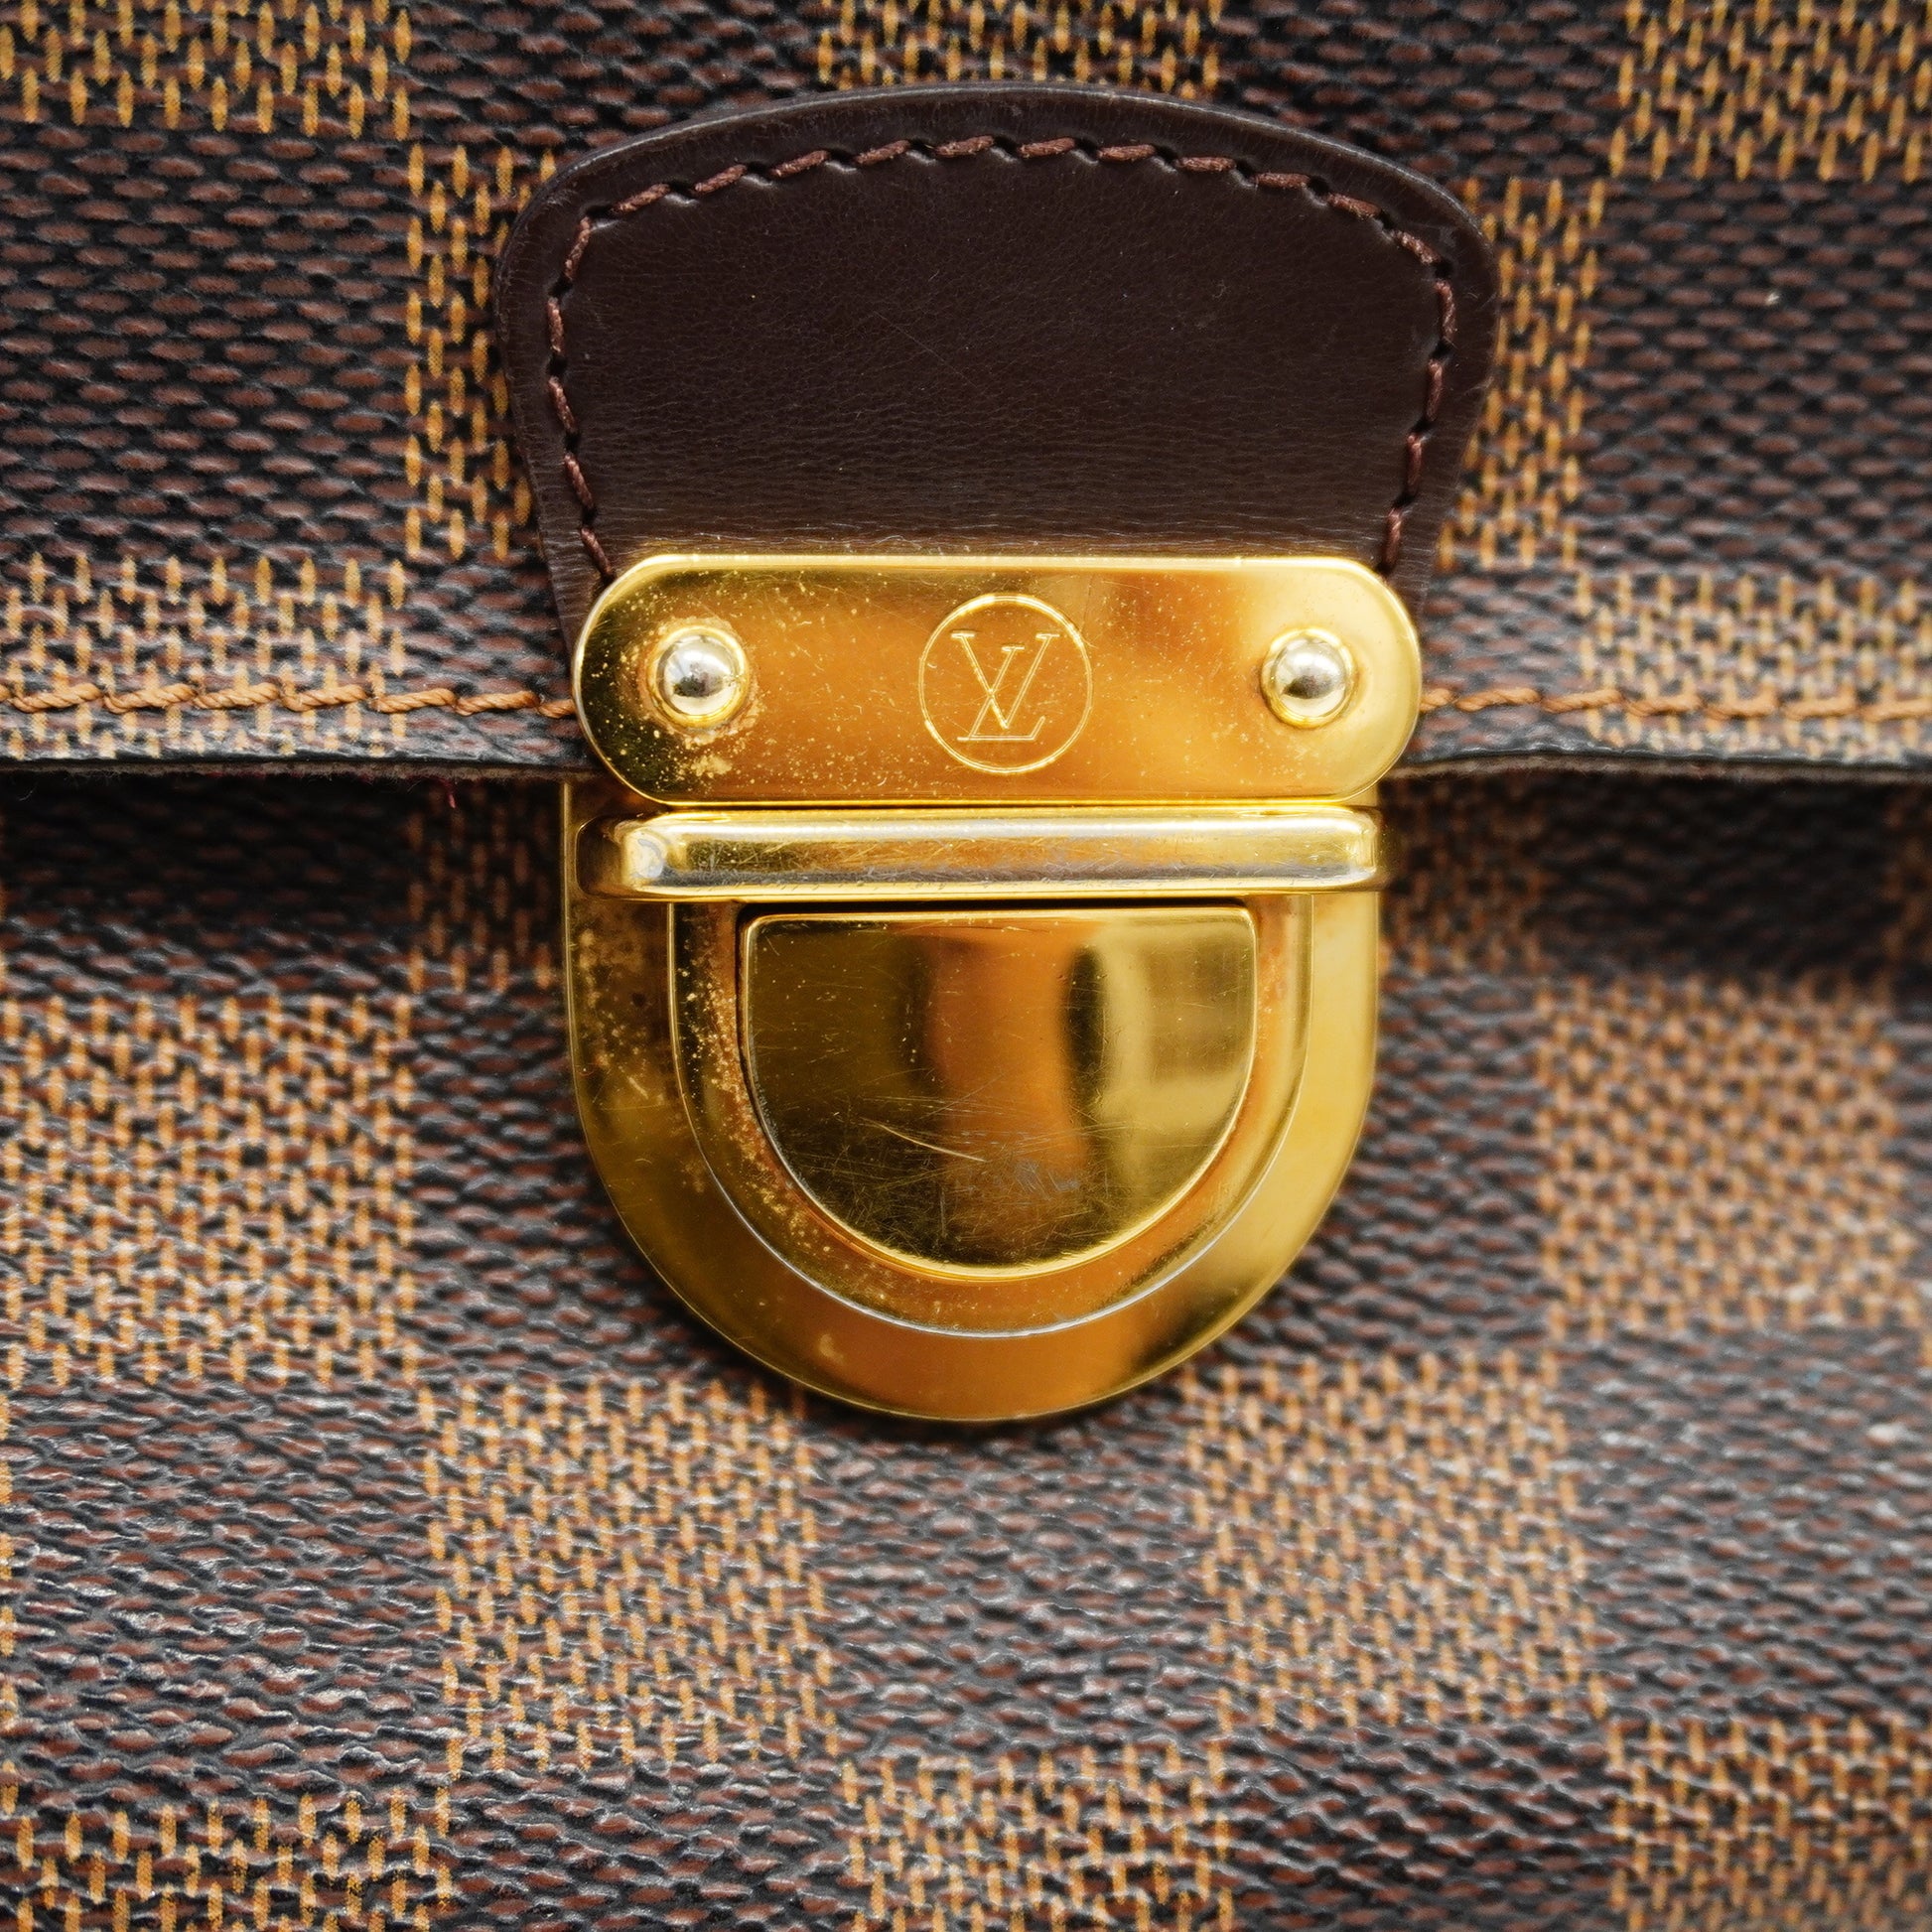 3yc1636] Auth Louis Vuitton Shoulder Bag Damier Ravello GM N60006